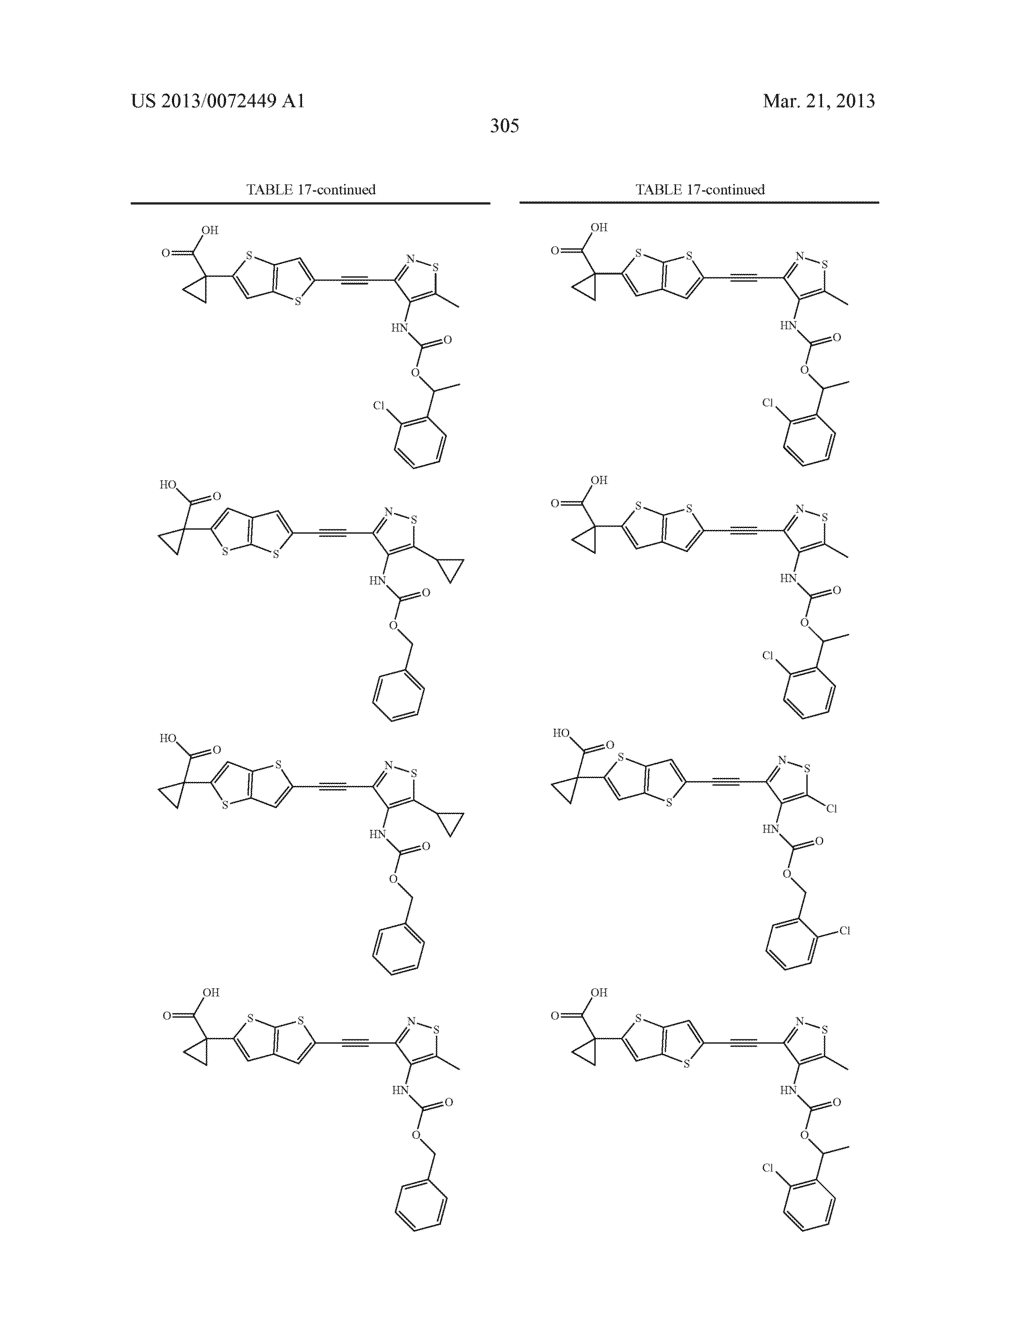 LYSOPHOSPHATIDIC ACID RECEPTOR ANTAGONISTS - diagram, schematic, and image 306